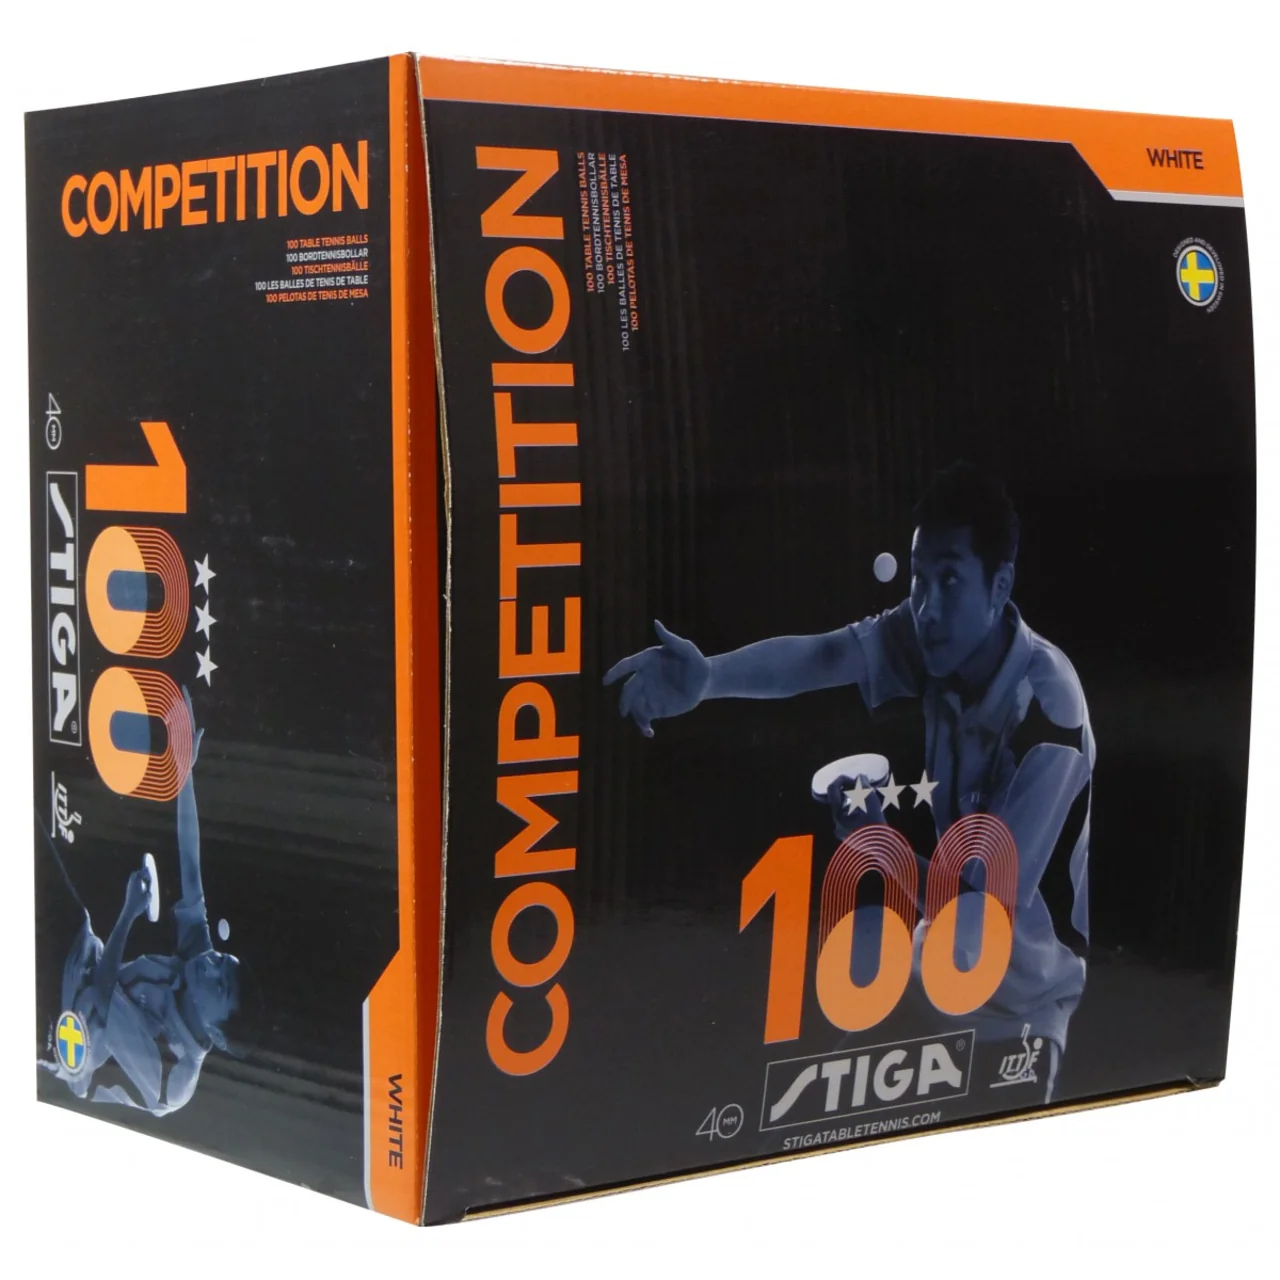 Stiga Competition 100 bollar